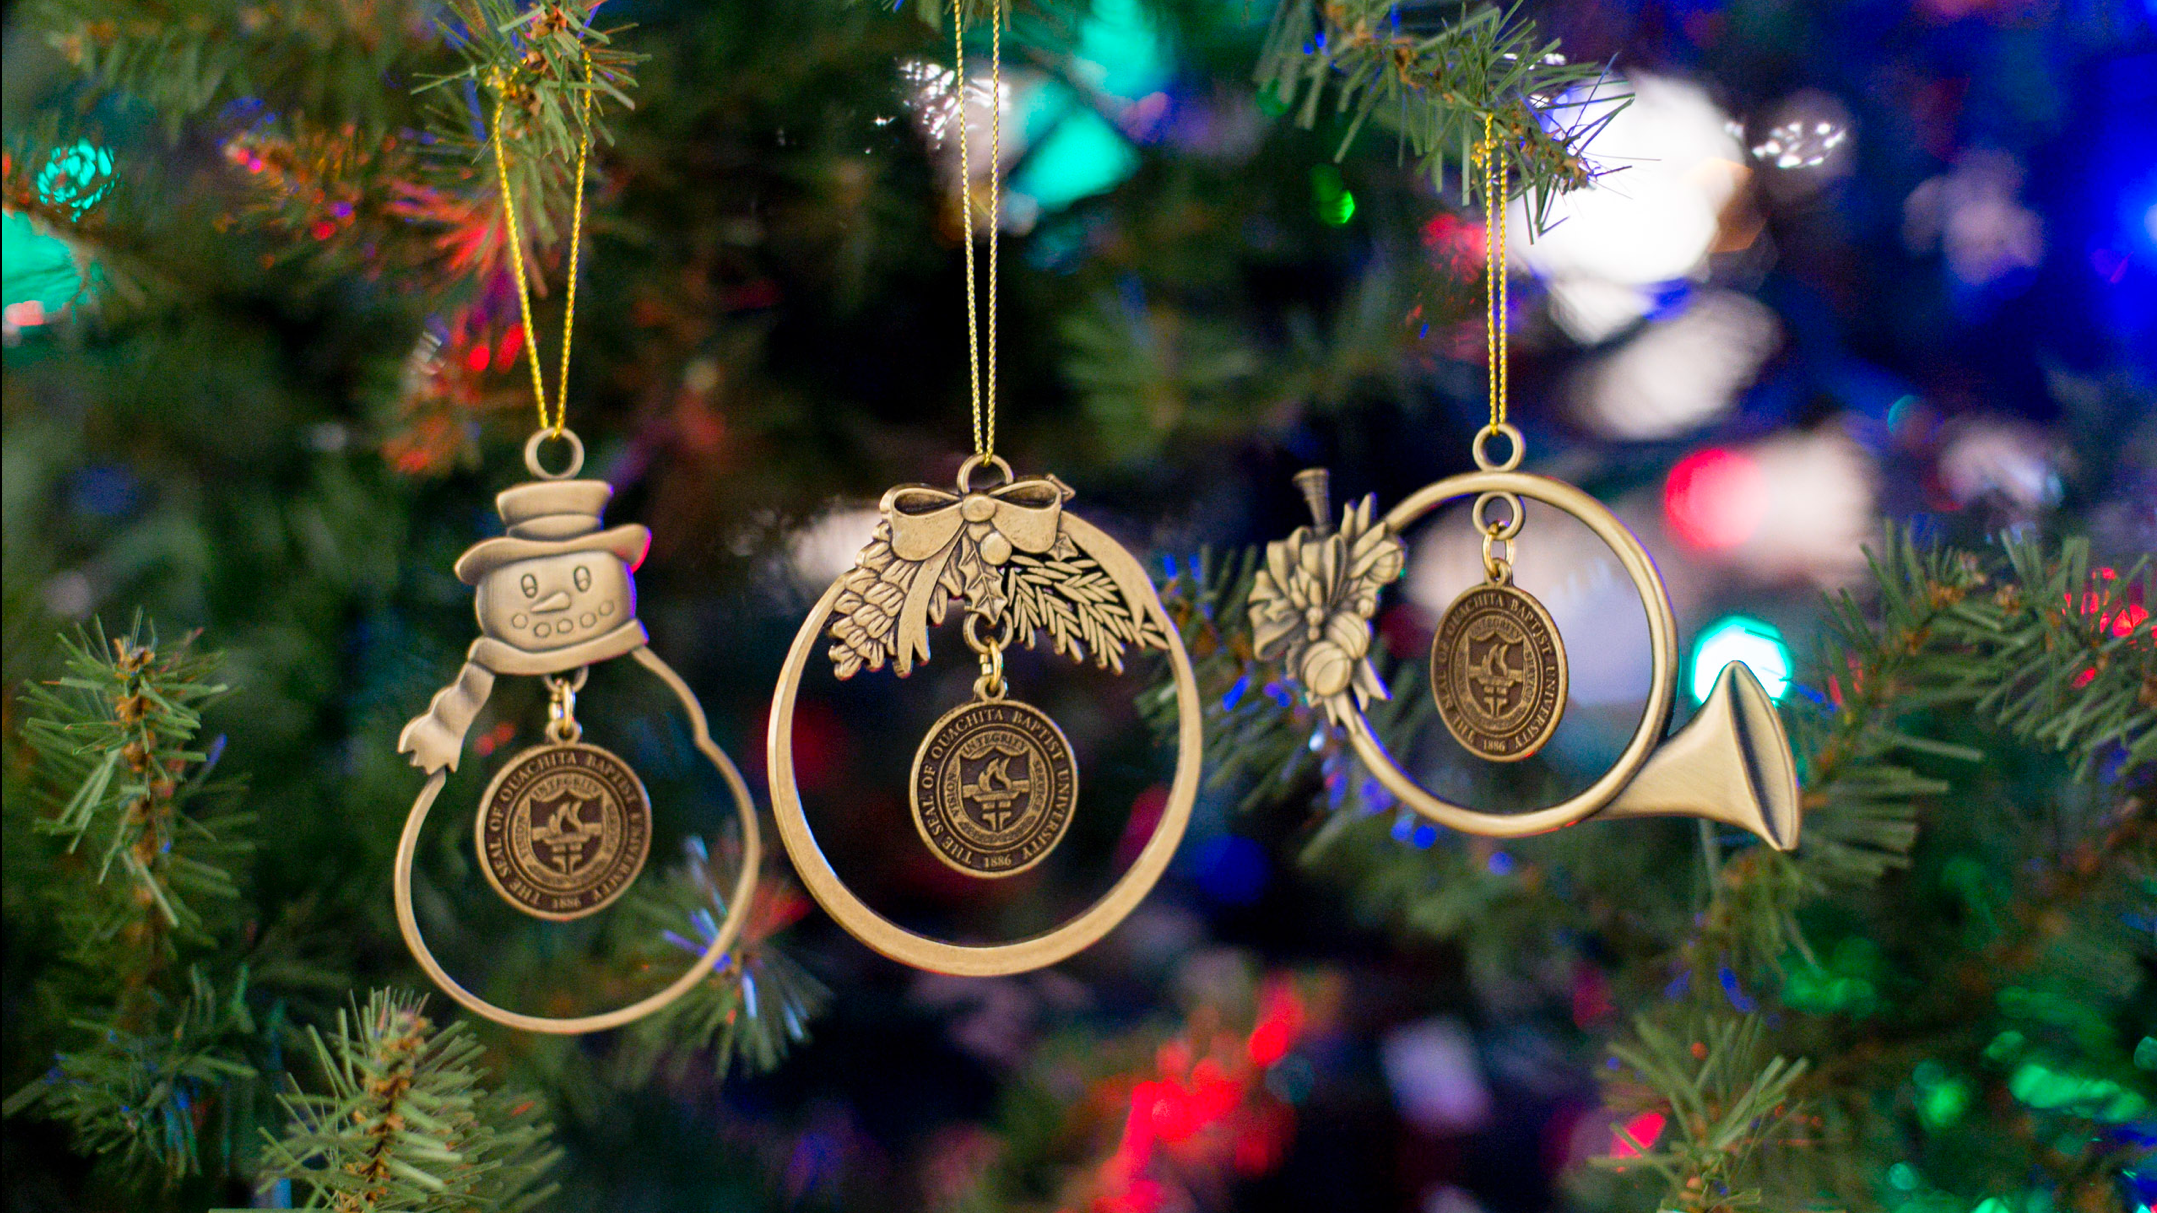 Ouachita Christmas ornaments